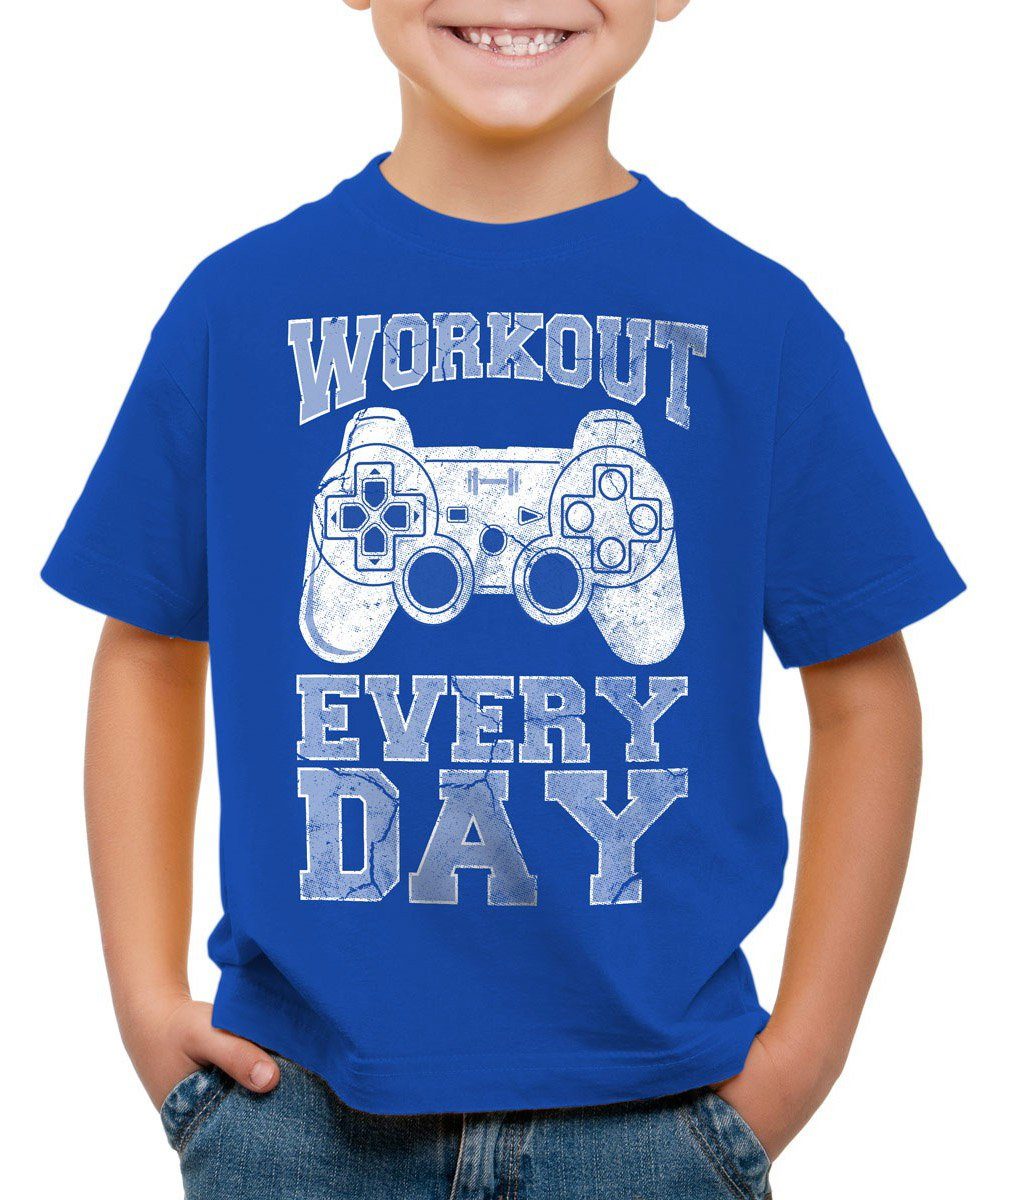 style3 Print-Shirt Kinder T-Shirt Workout Gamer play sport station kontroller konsole gym game fun